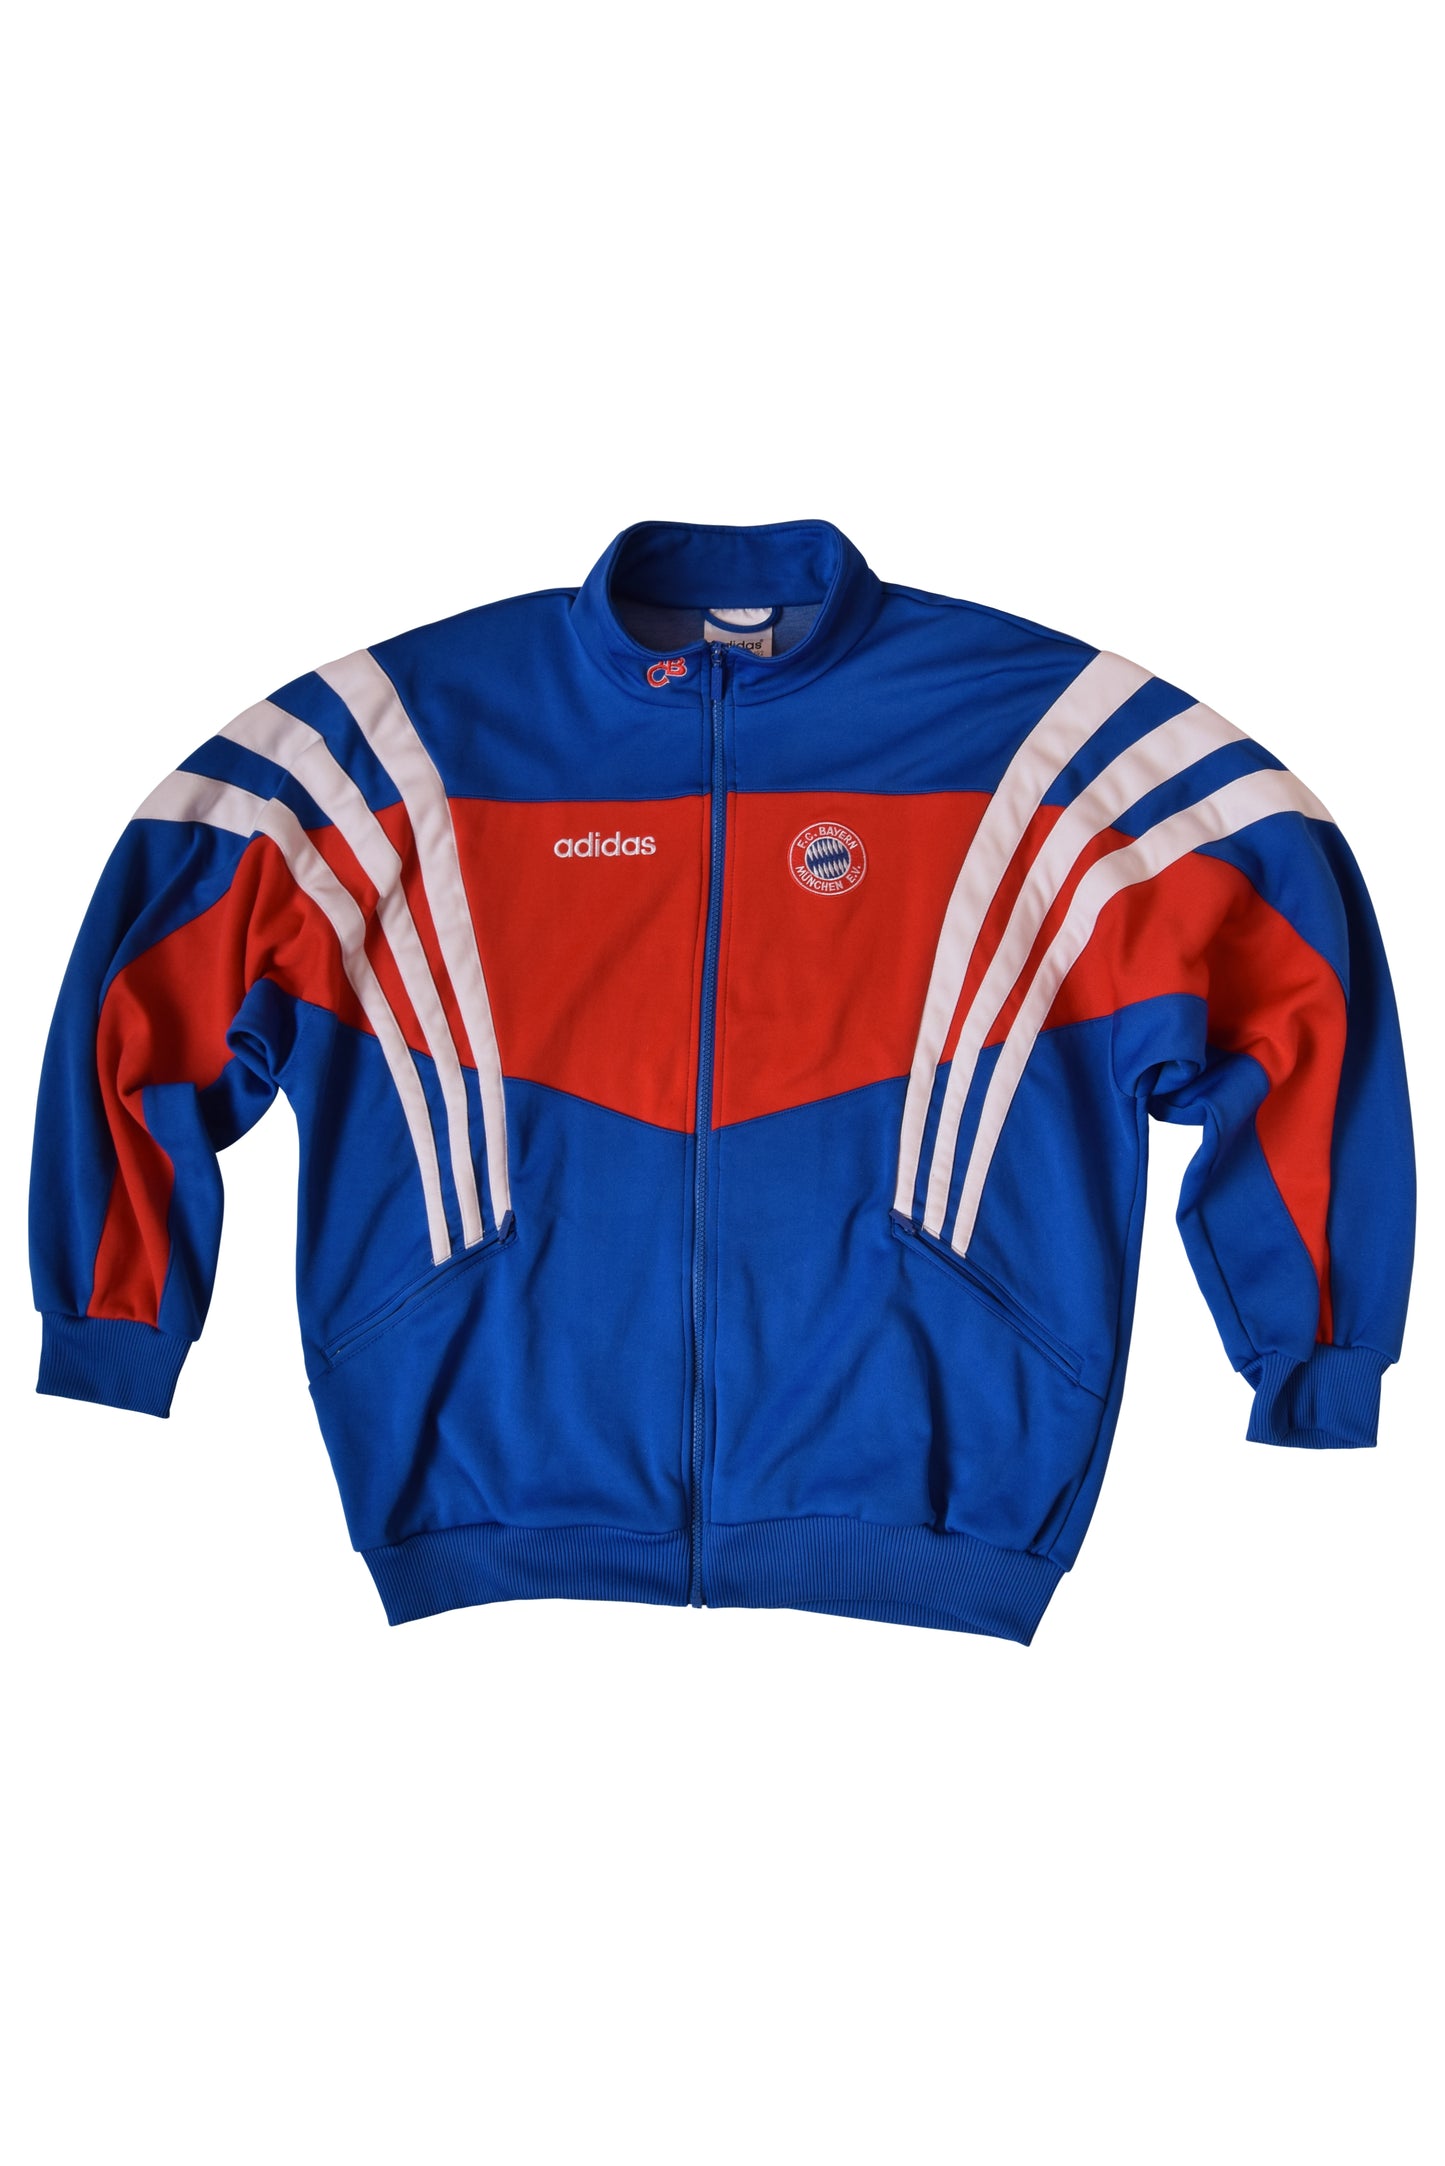 Vintage Bayern Munchen Adidas Jacket Track Top 1995-1996 Red blue